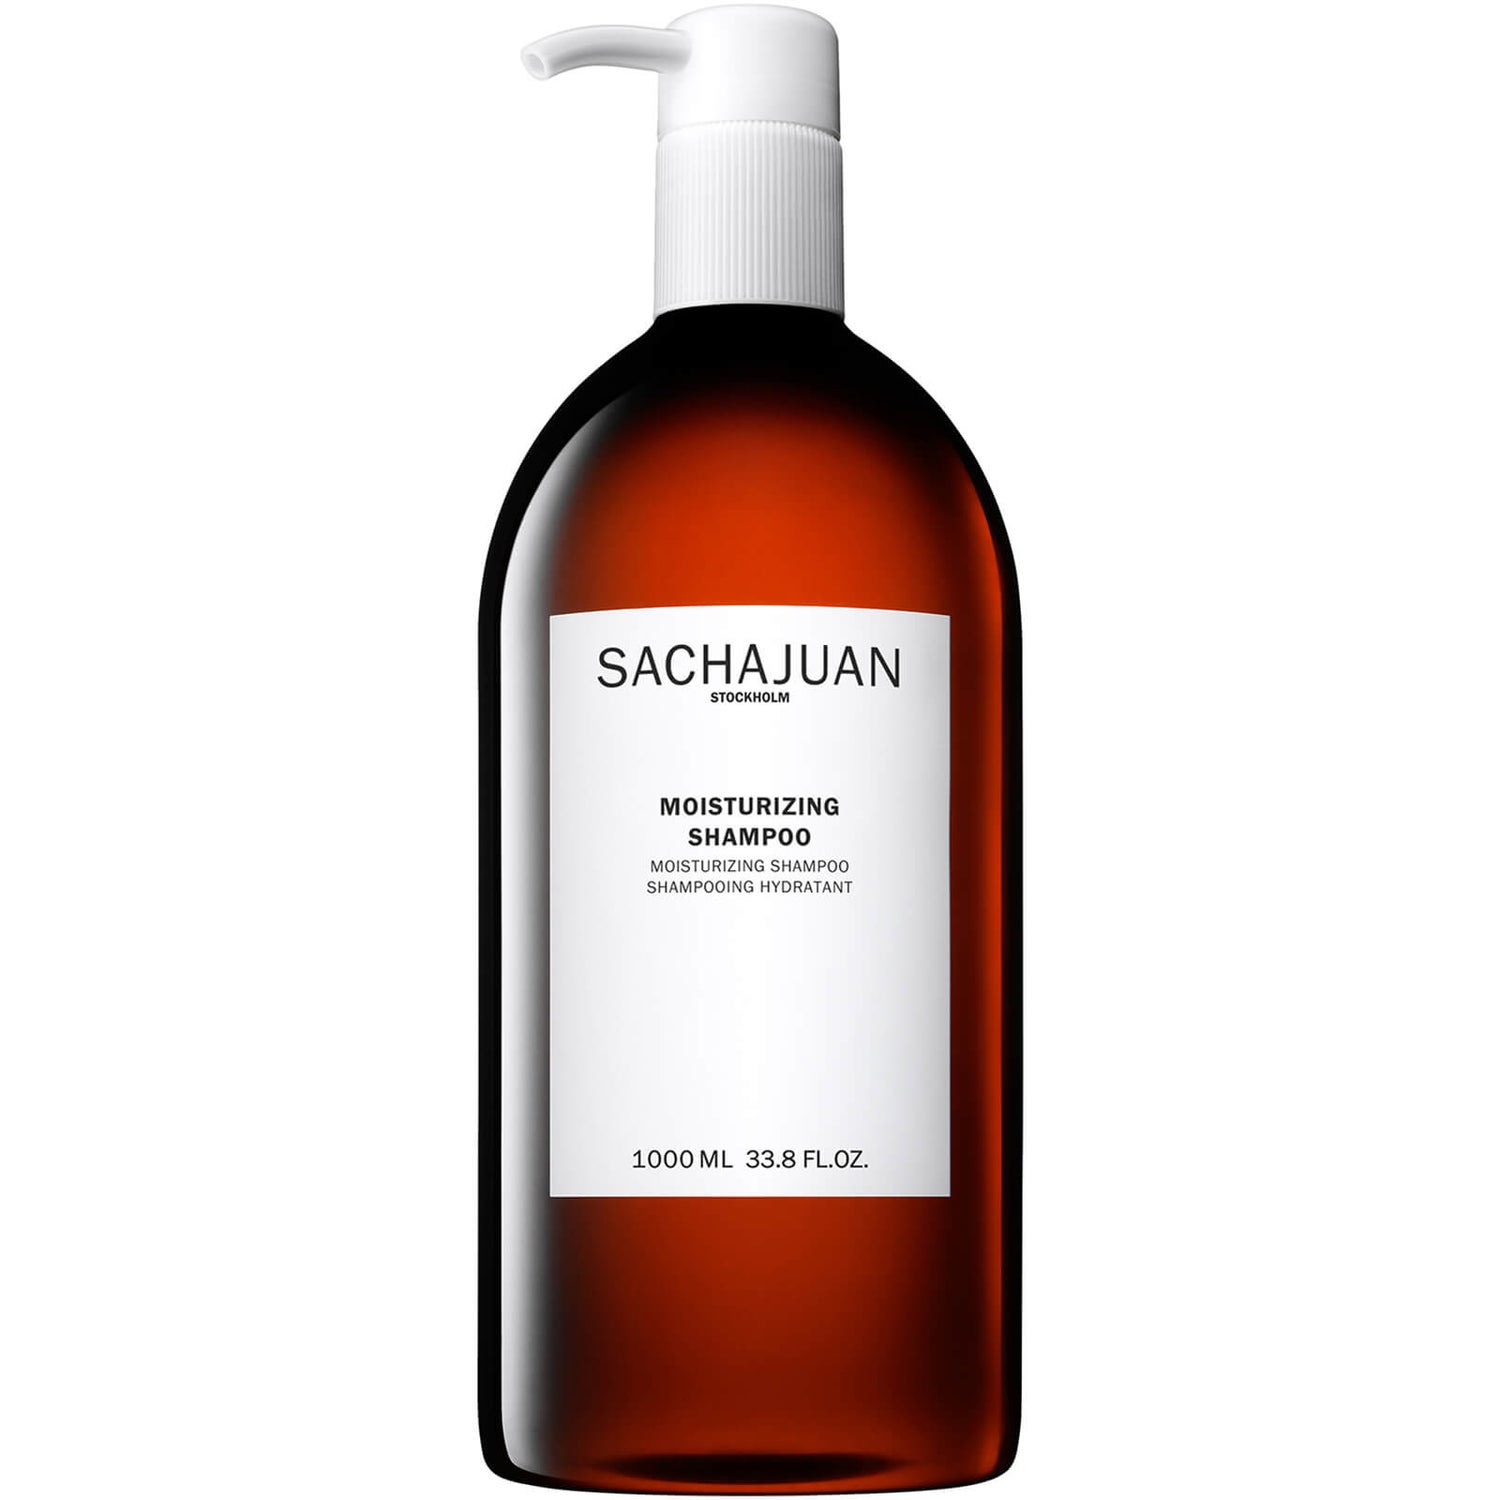 Sachajuan Moisturizing Shampoo 1000ml (Worth $116)